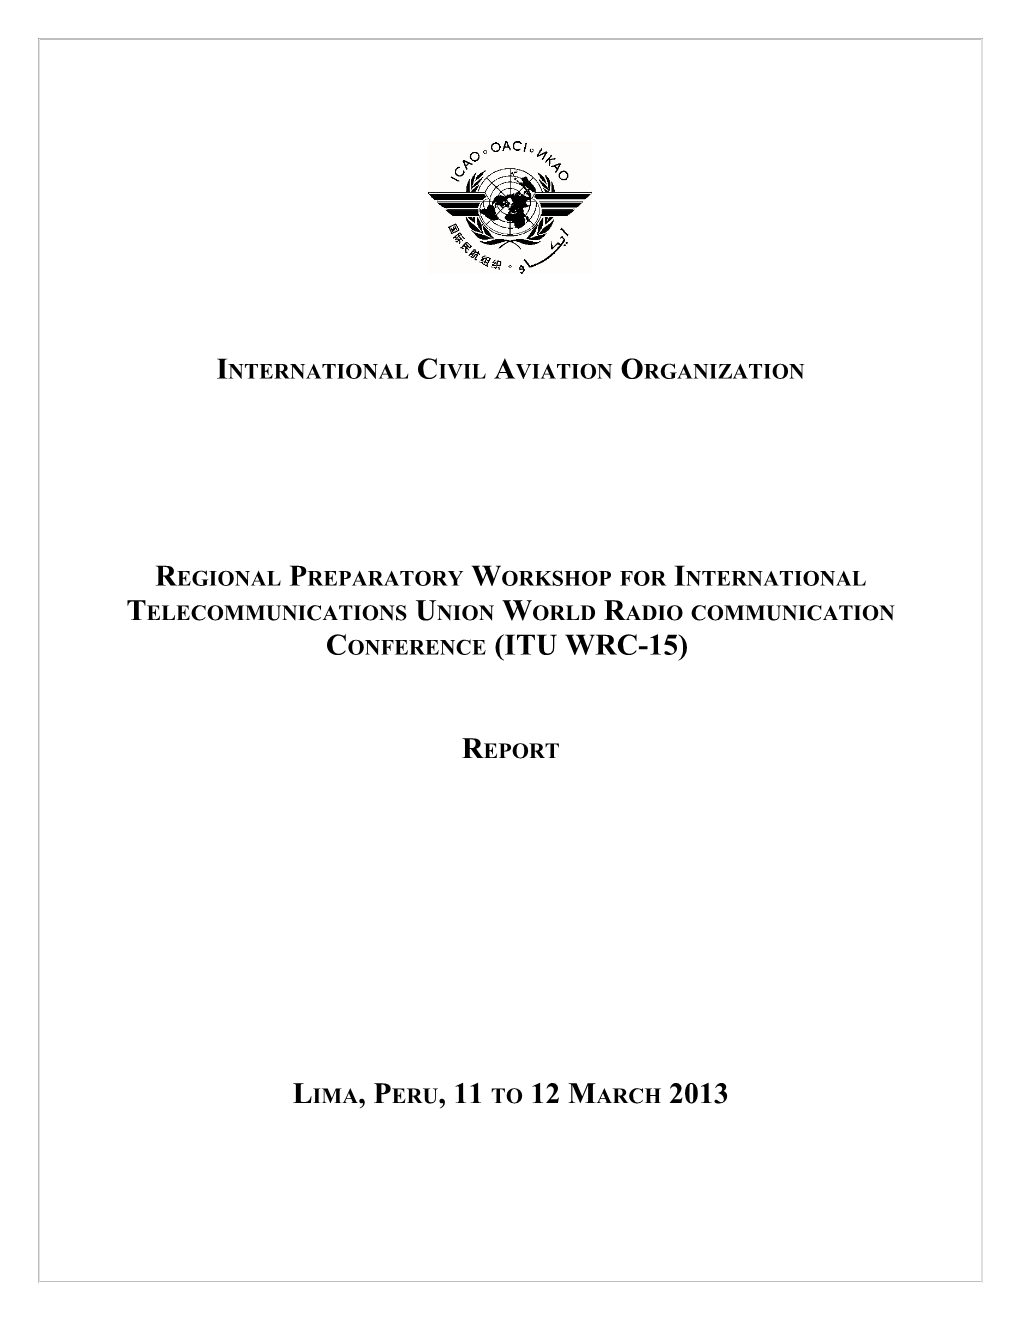 Report: Regional Preparatory Workshop for International Telecommunications Union World